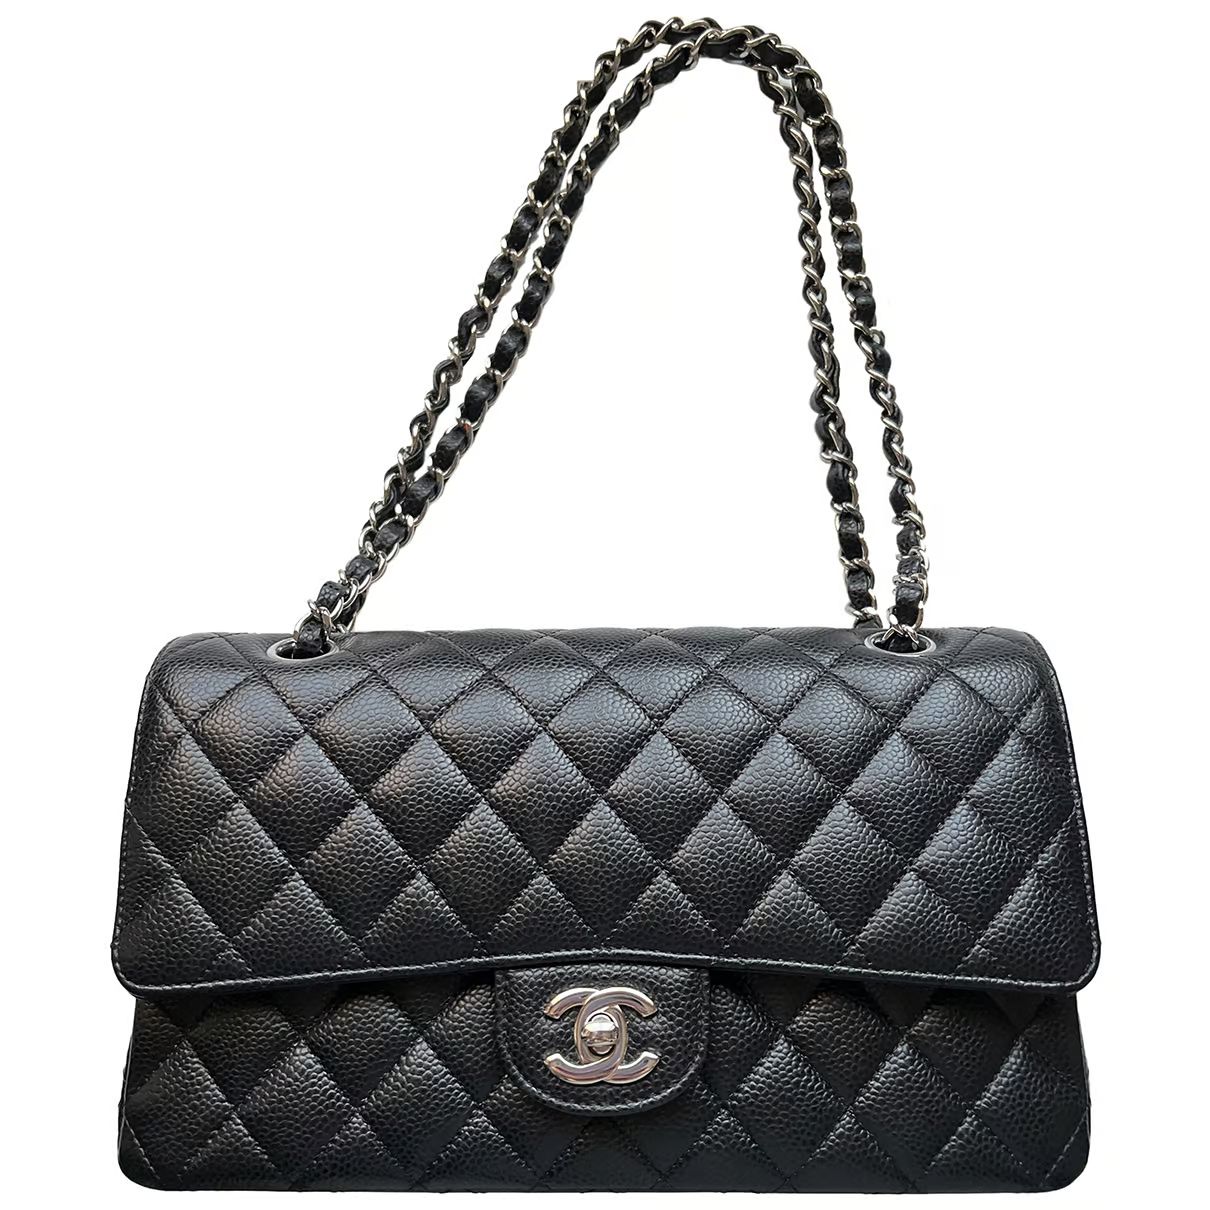 Timeless/Classique leather handbagChanel | Vestiaire Collective (Global)